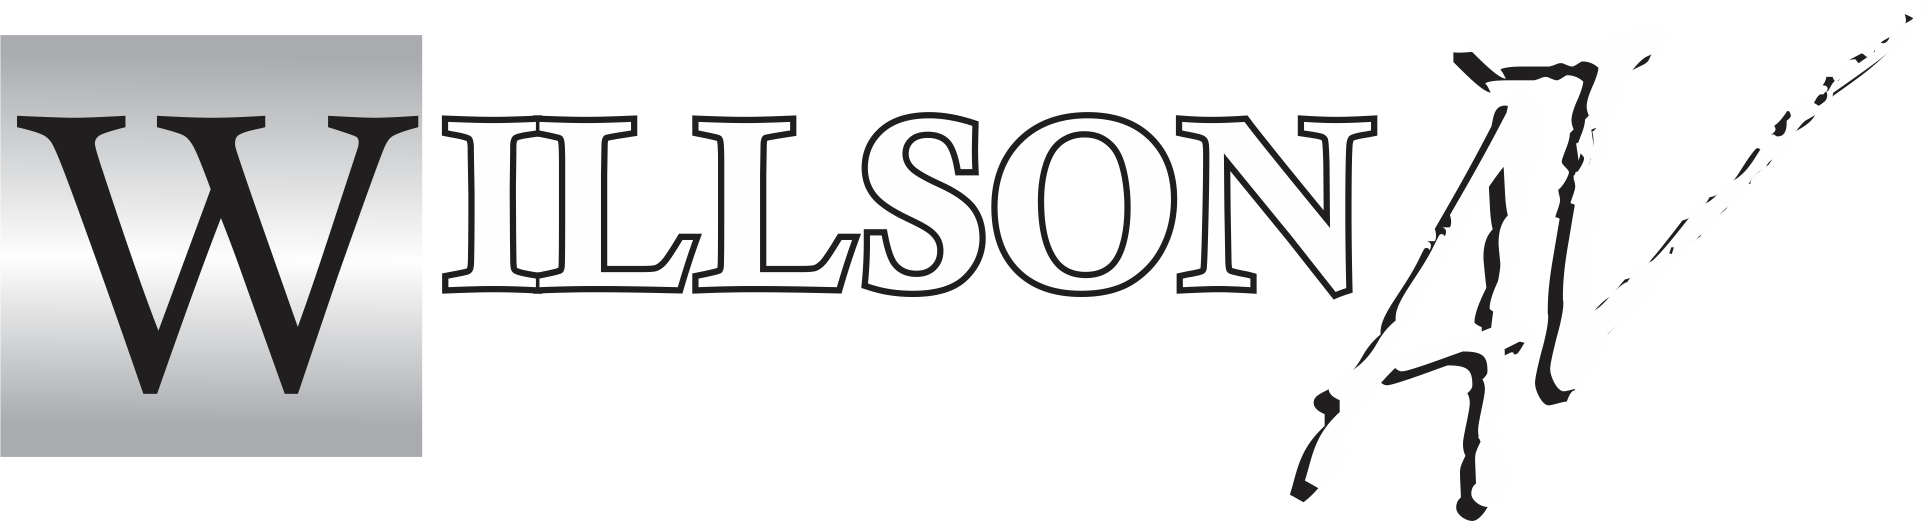 willson-av-logo